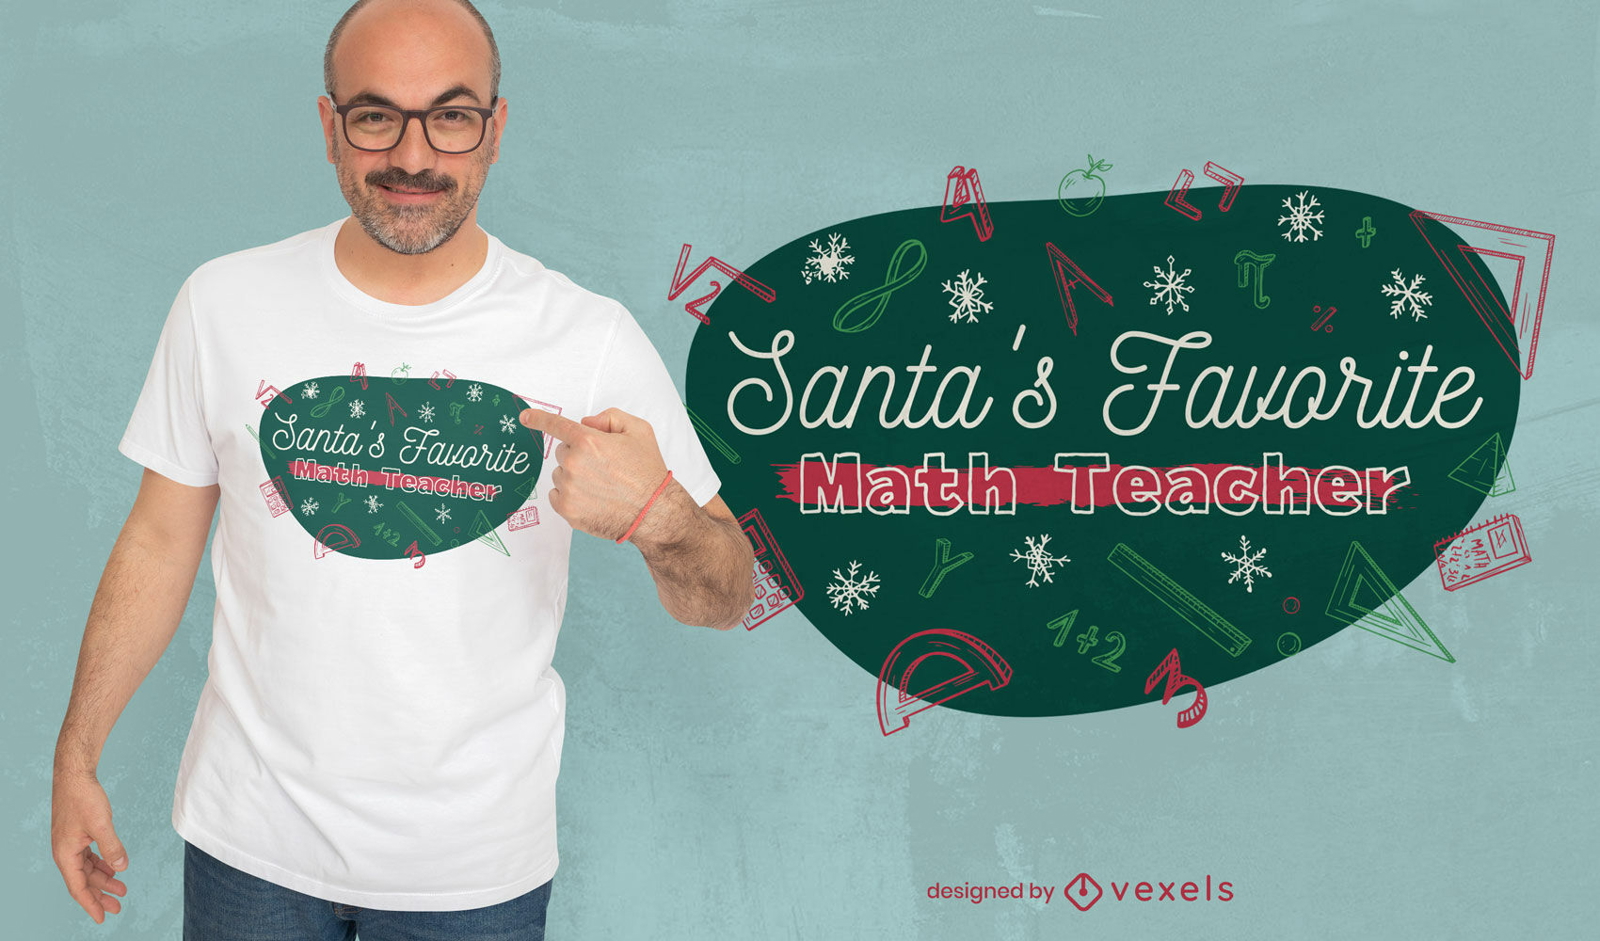 Santa's favorite math teacher Christmas t-shirt design